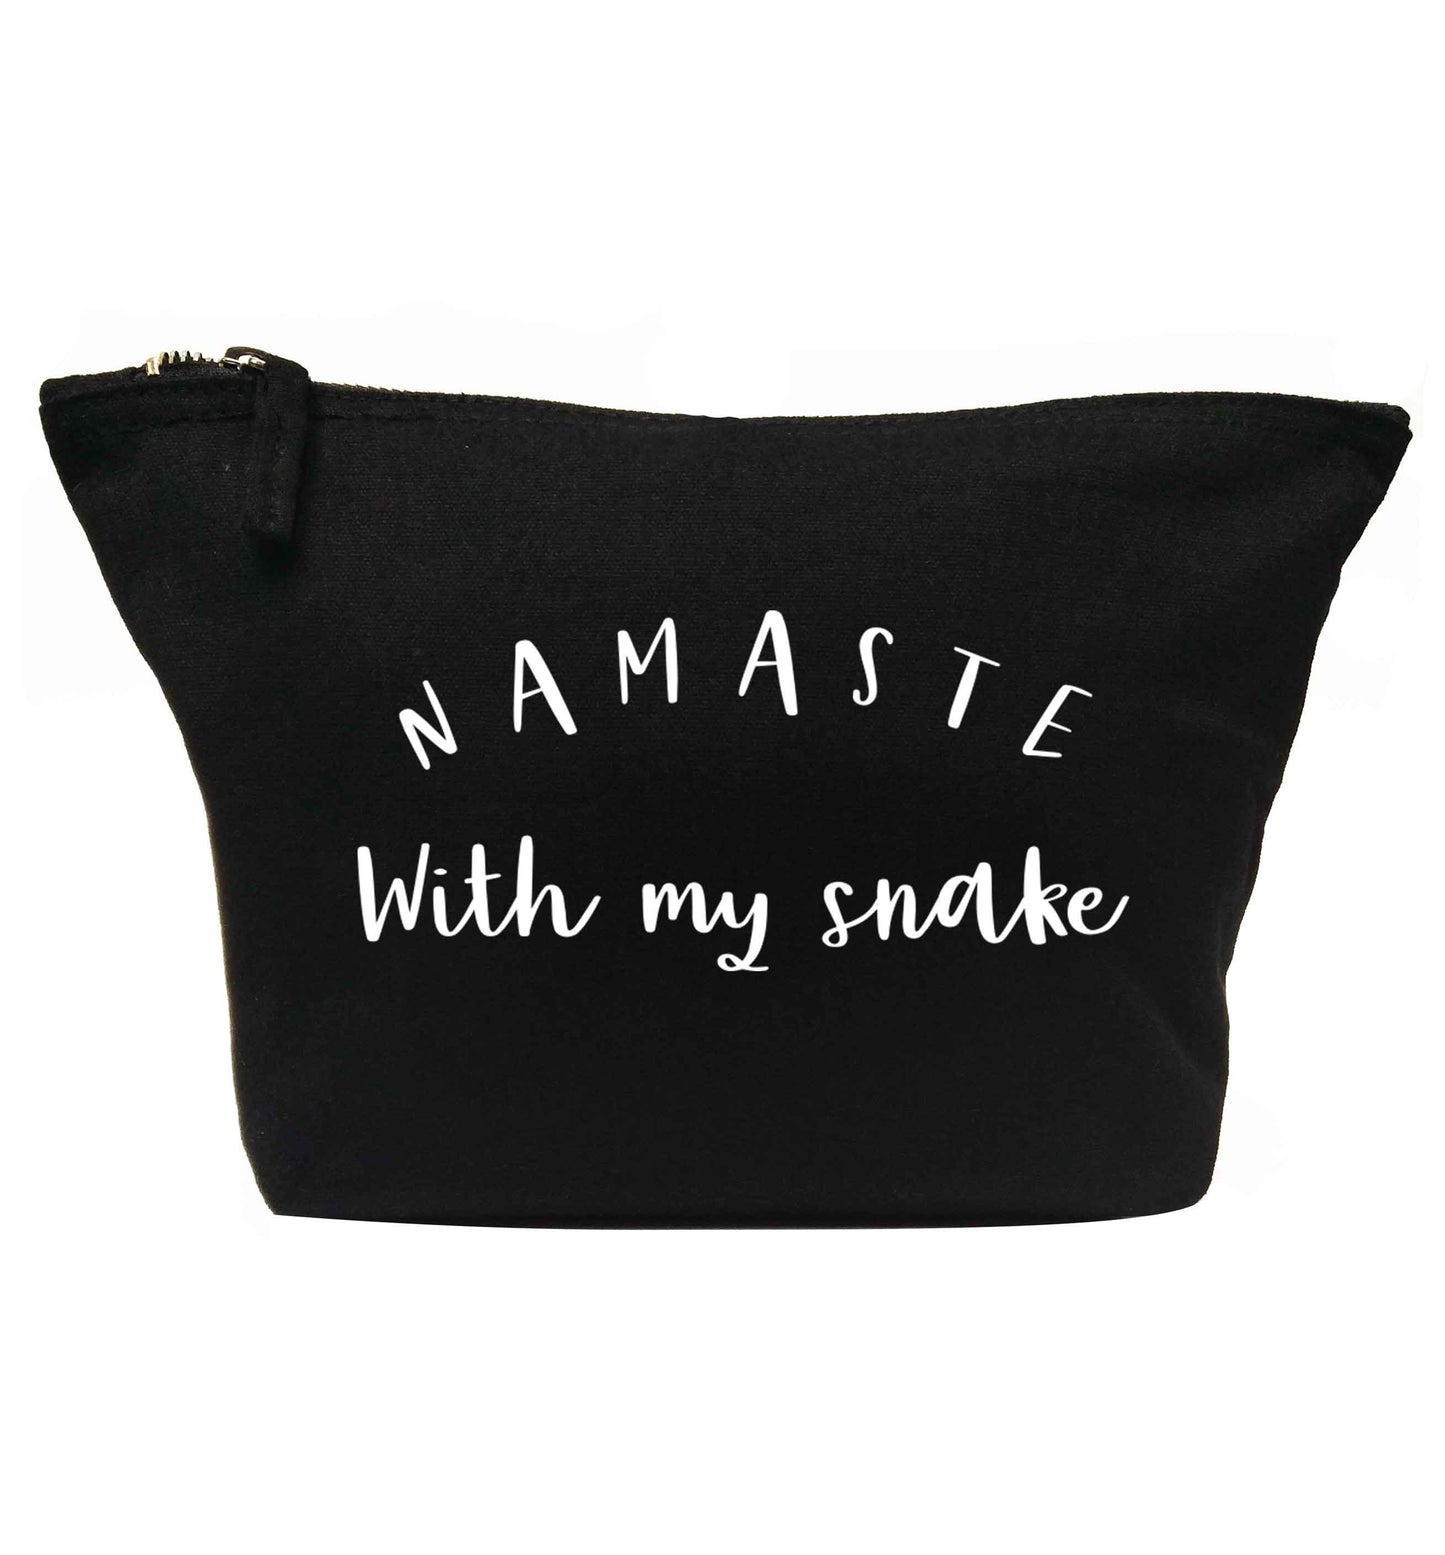 Namaste with my snake | makeup / wash bag